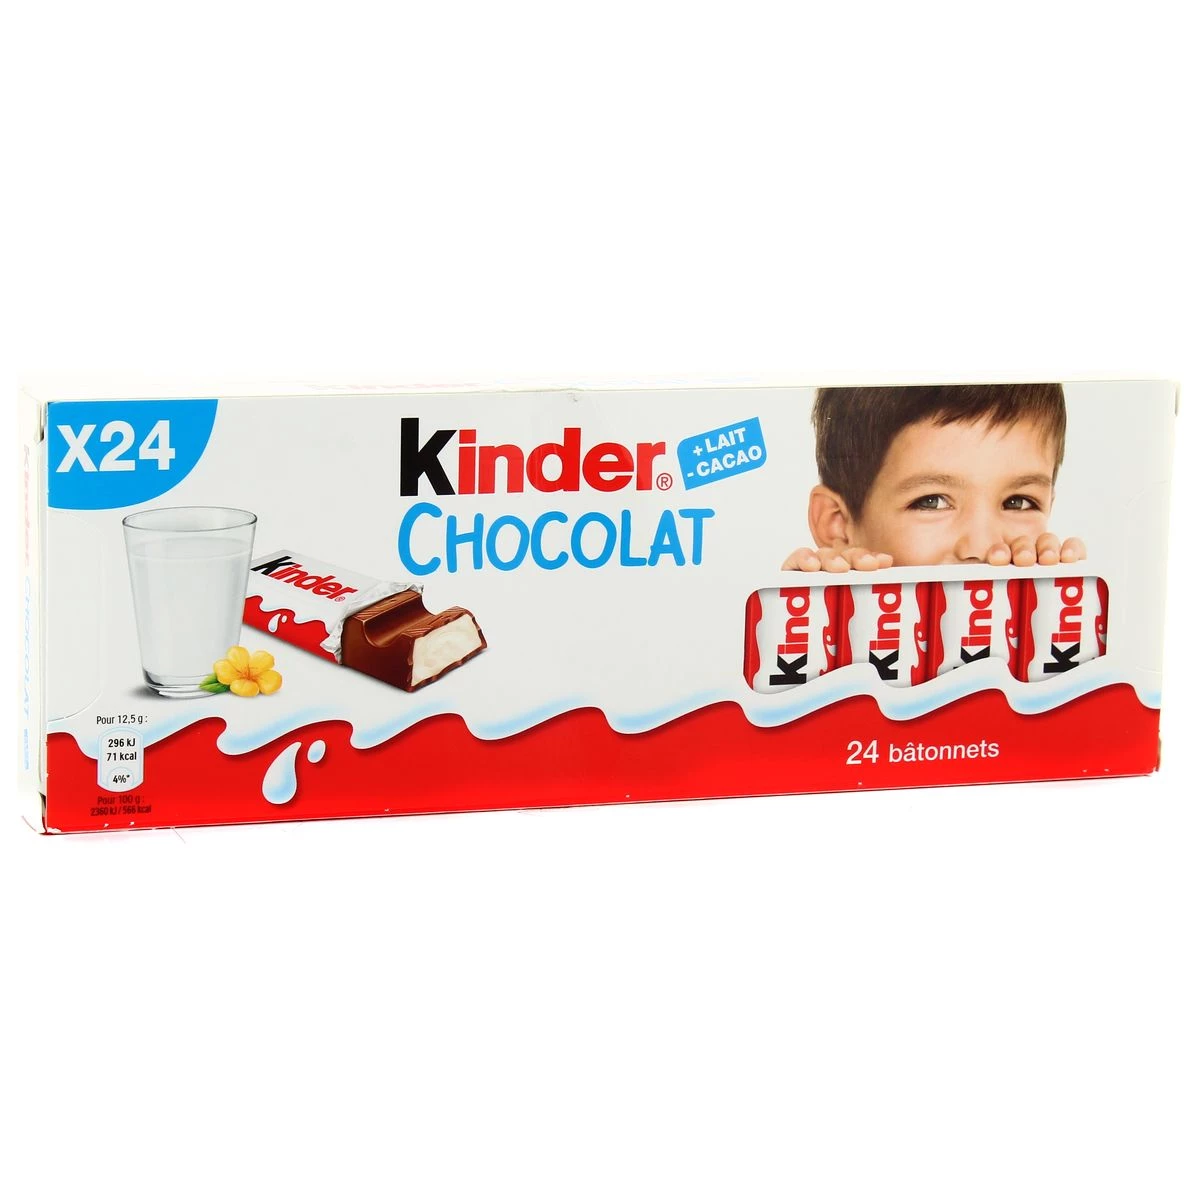 Chocolate bars 300g - KINDER wholesaler